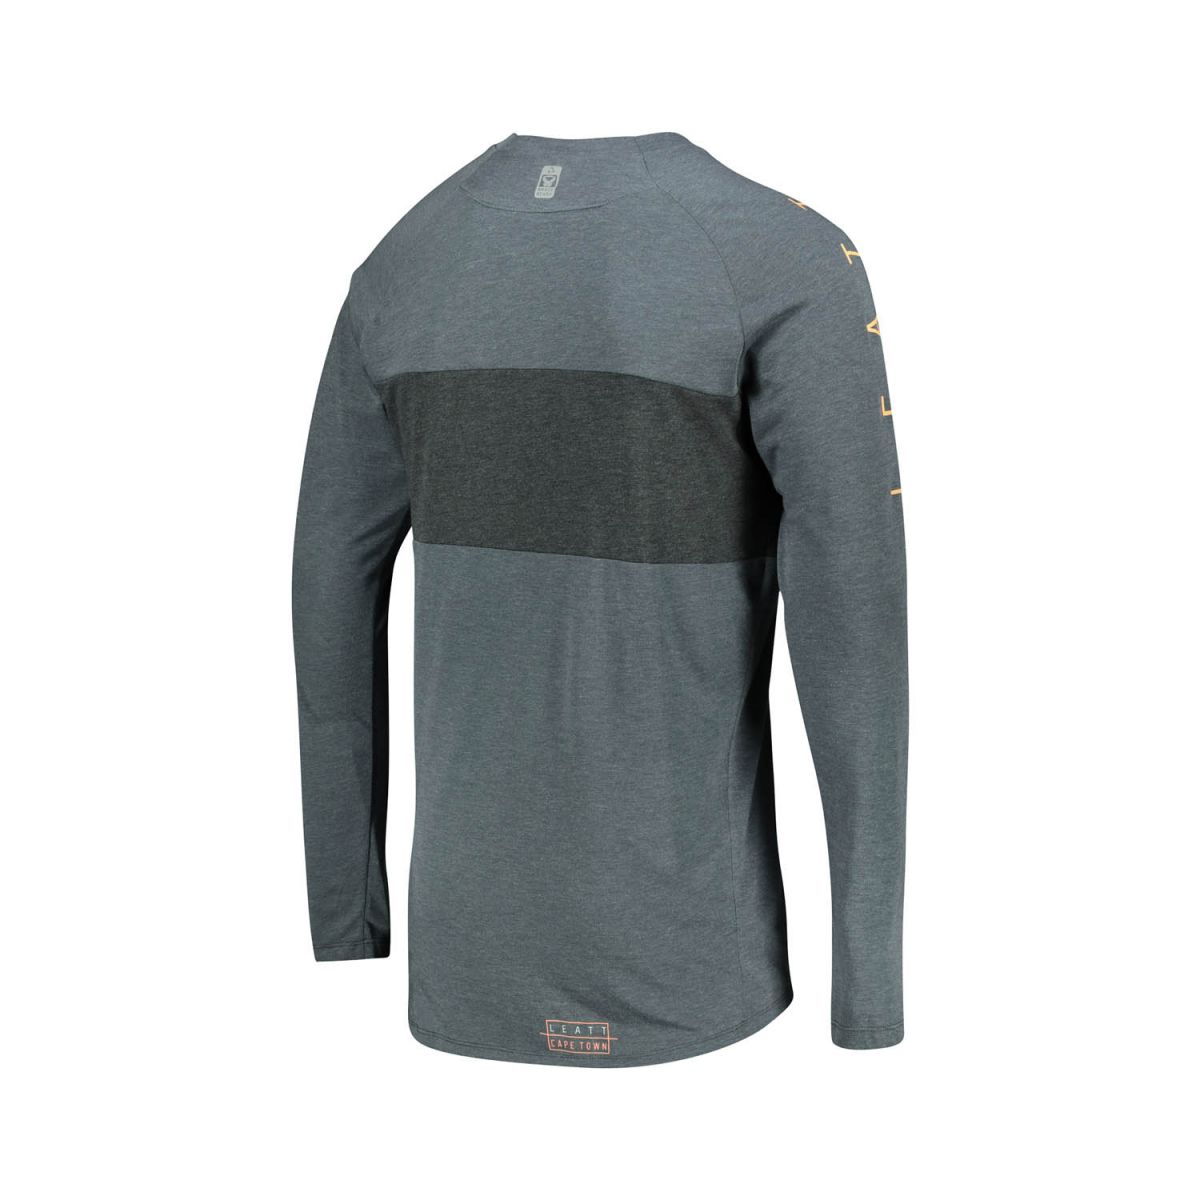 Camiseta de manga larga de enduro Leatt Gravity 2.0 Coral color gris | bicicleta | casual | maresme | barcelona